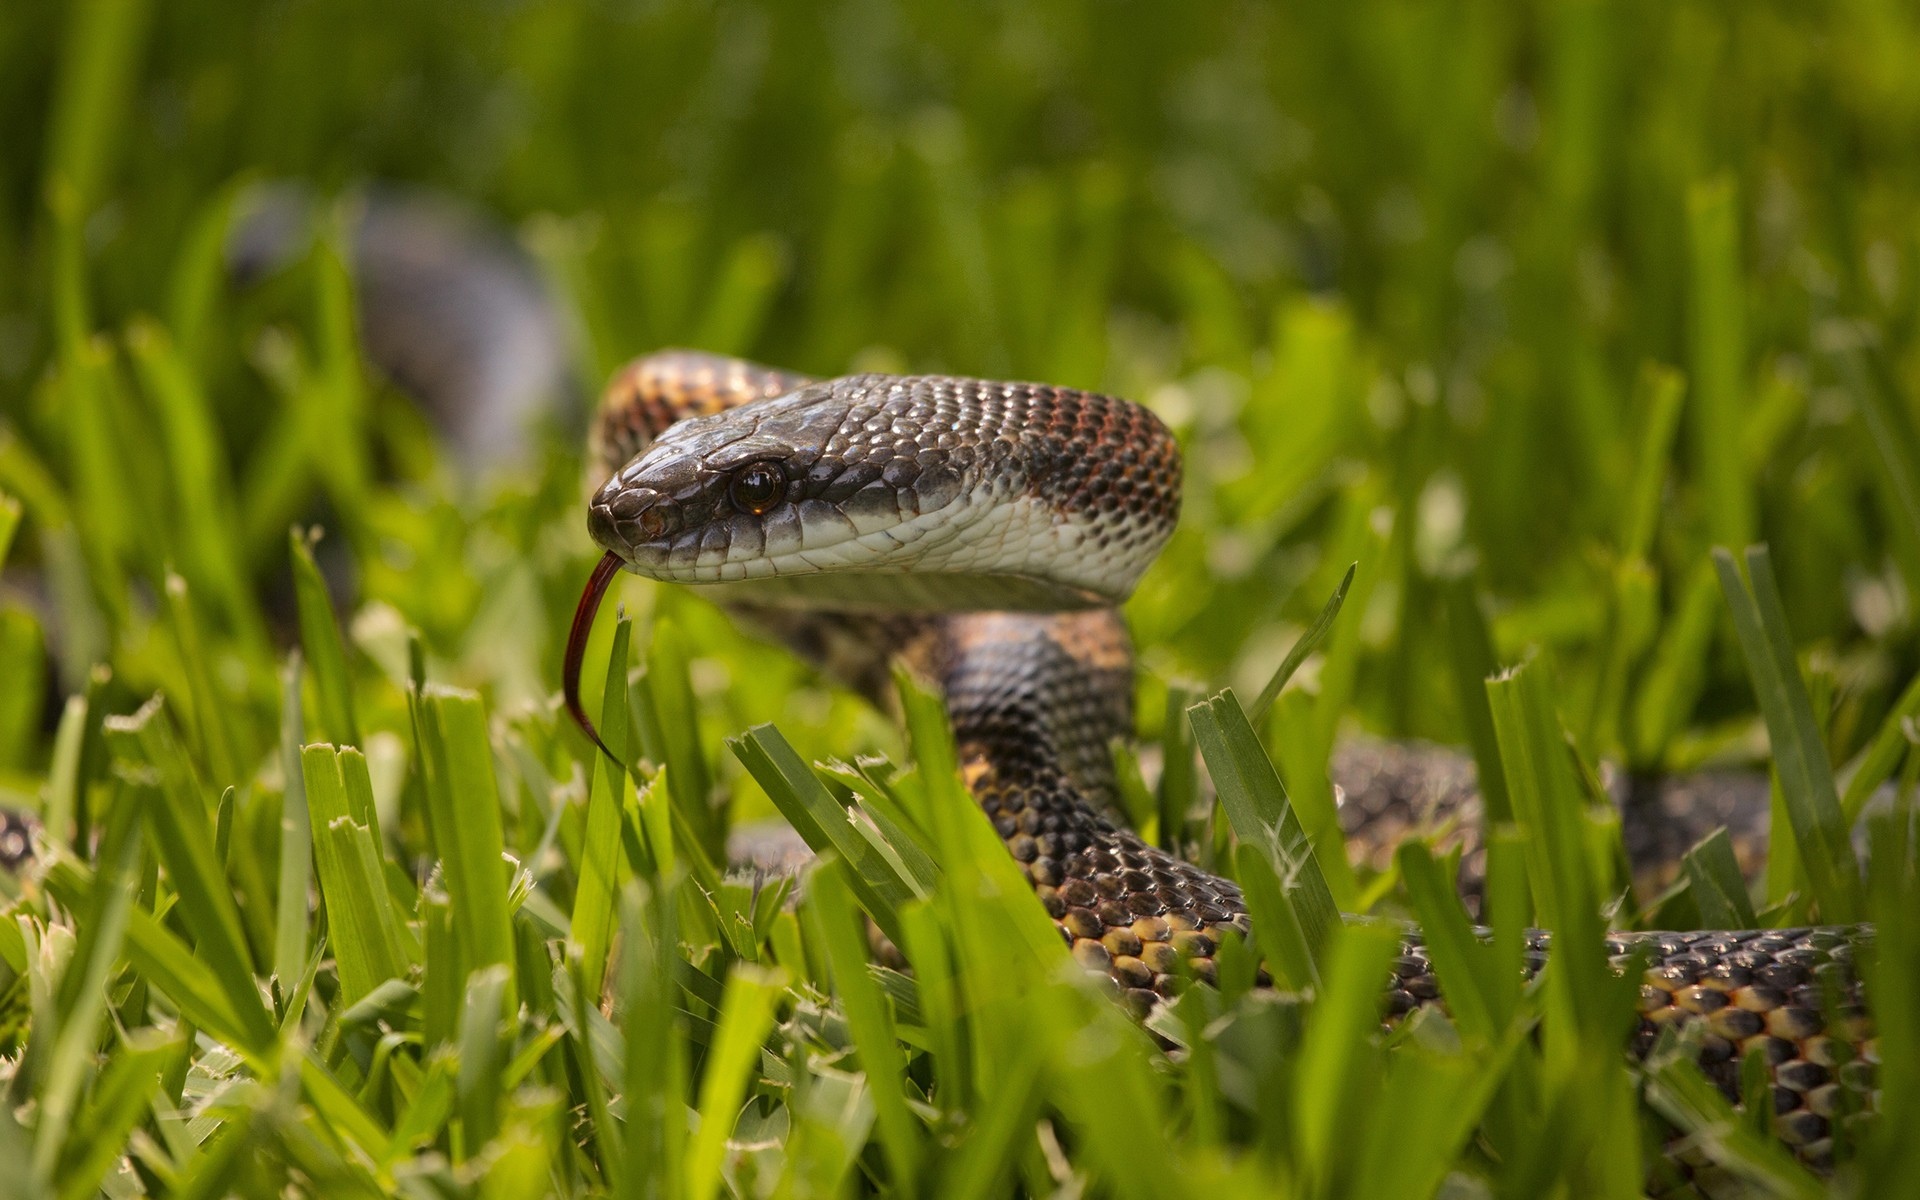 close up, Snakes, Macro, Snakes, Grass Wallpaper